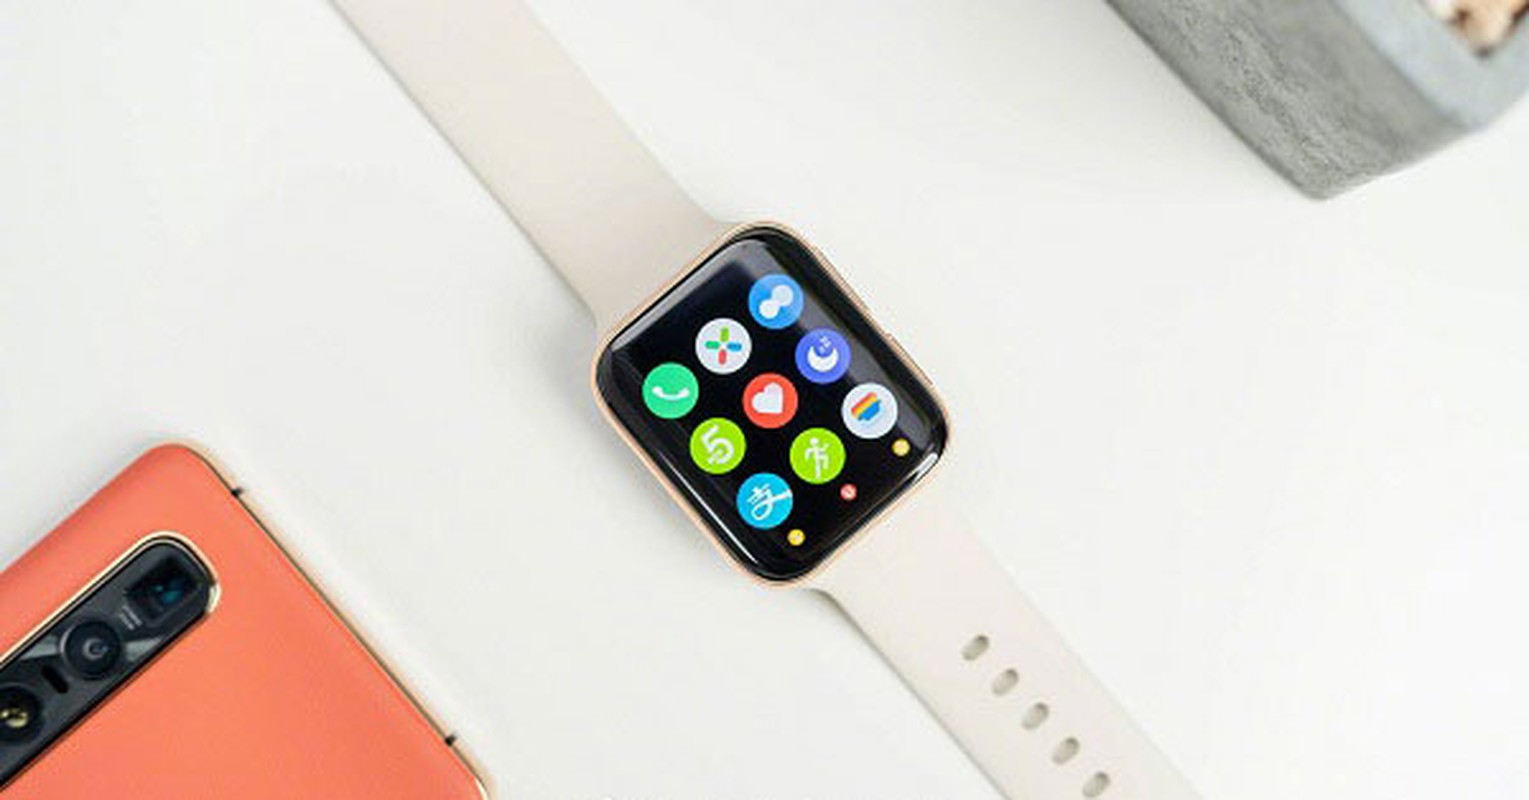 OPPO Watch tai Viet Nam co “dang gom” so voi Apple Watch?-Hinh-7